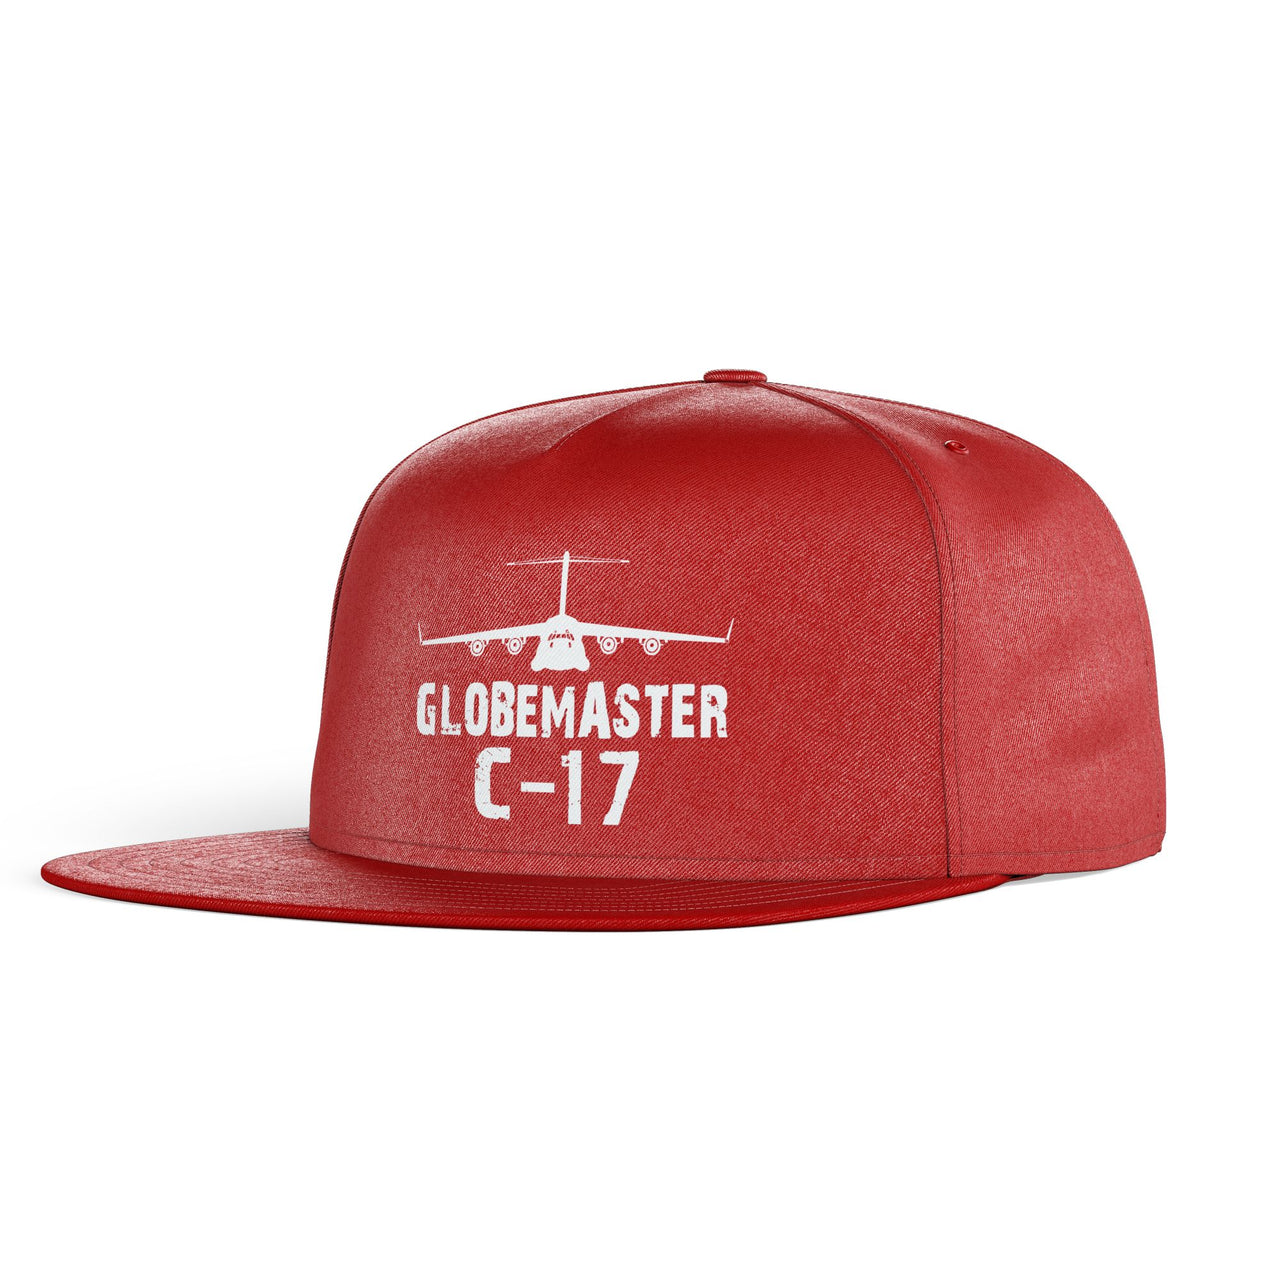 GlobeMaster C-17 & Plane Designed Snapback Caps & Hats